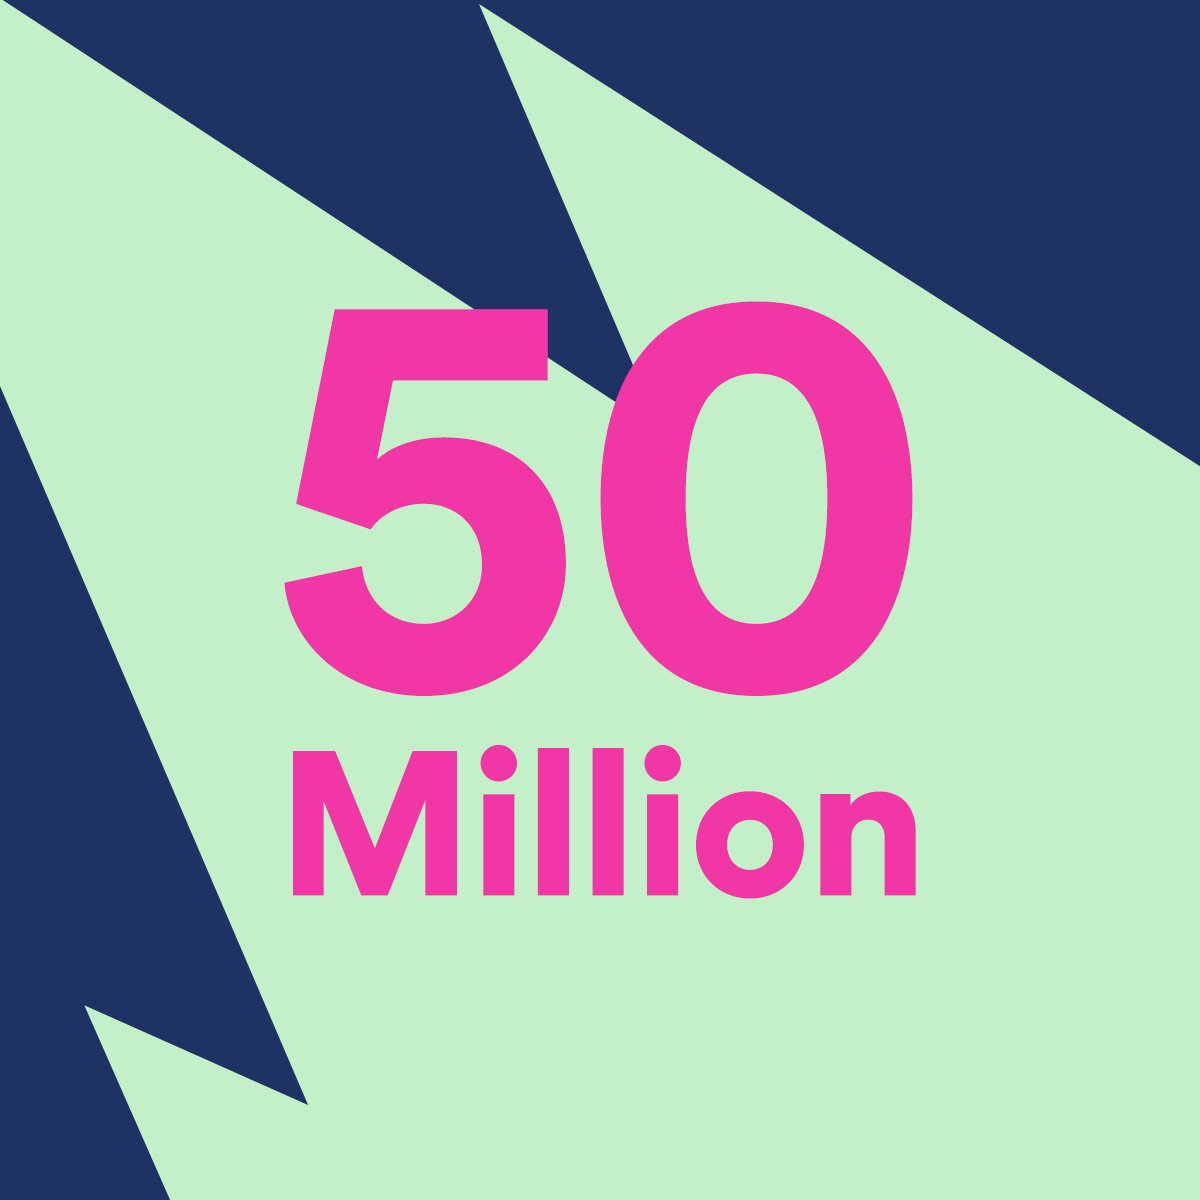 Spotify llega a los 50 millones de suscriptores a nivel mundial